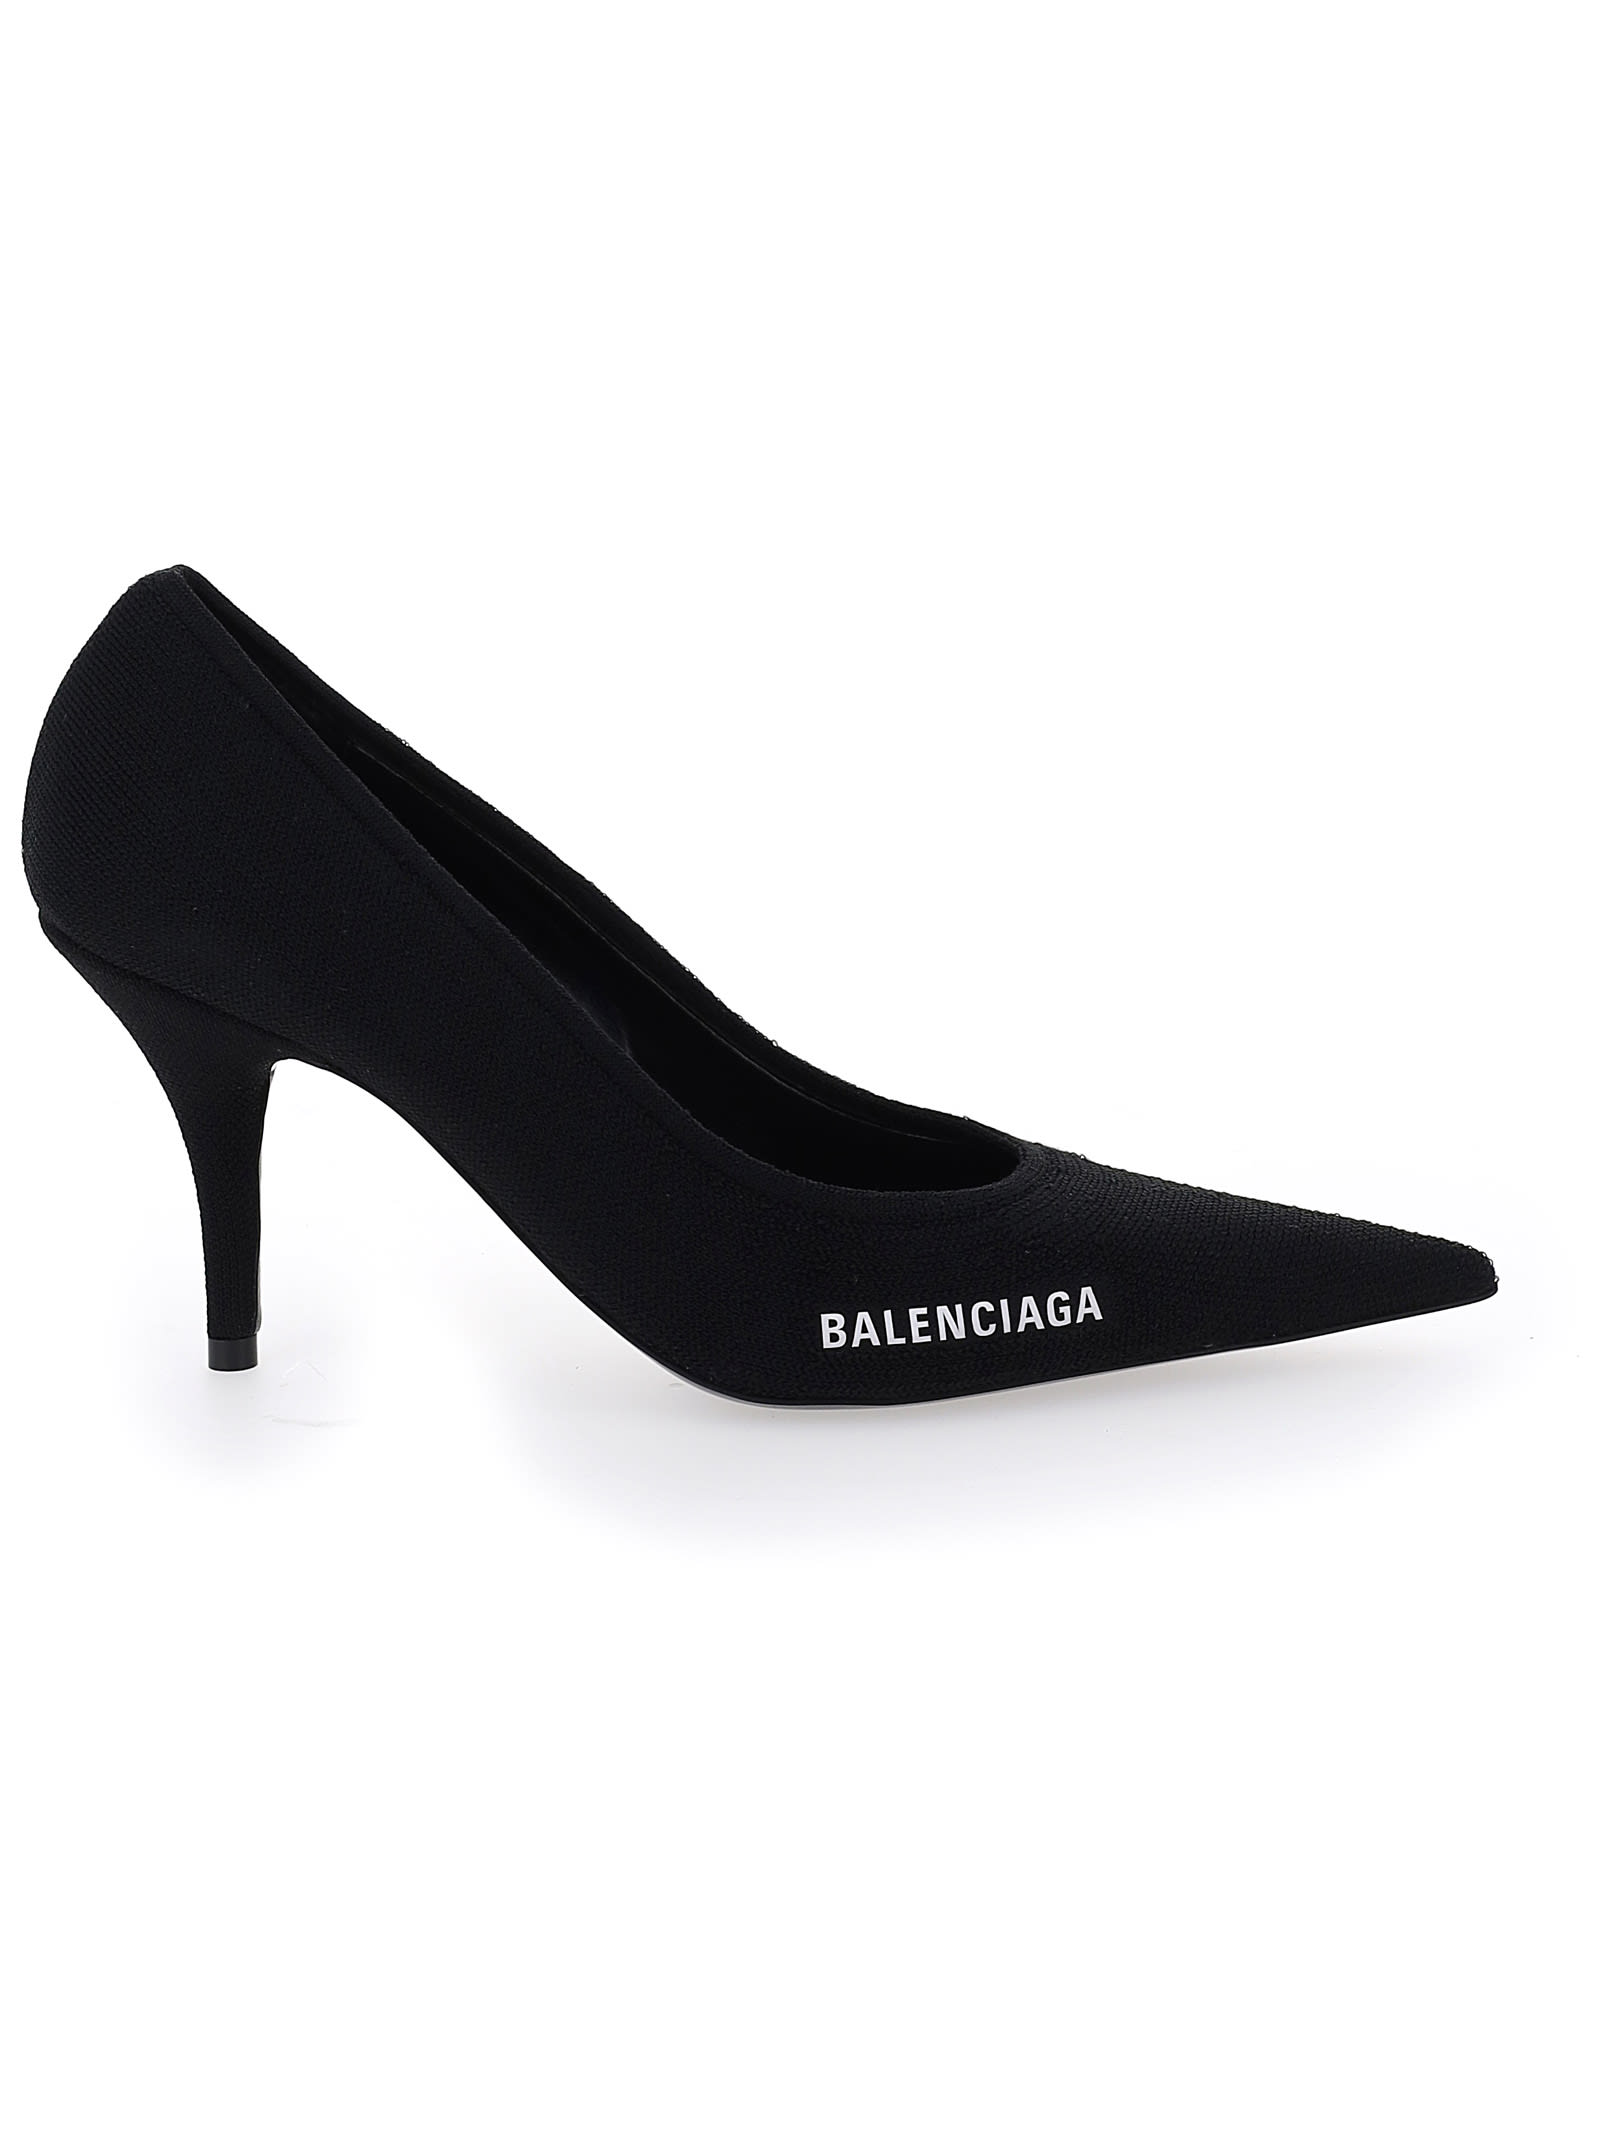 Buy Balenciaga Logo Detail Pointed Toe Pumps online, shop Balenciaga shoes with free shipping